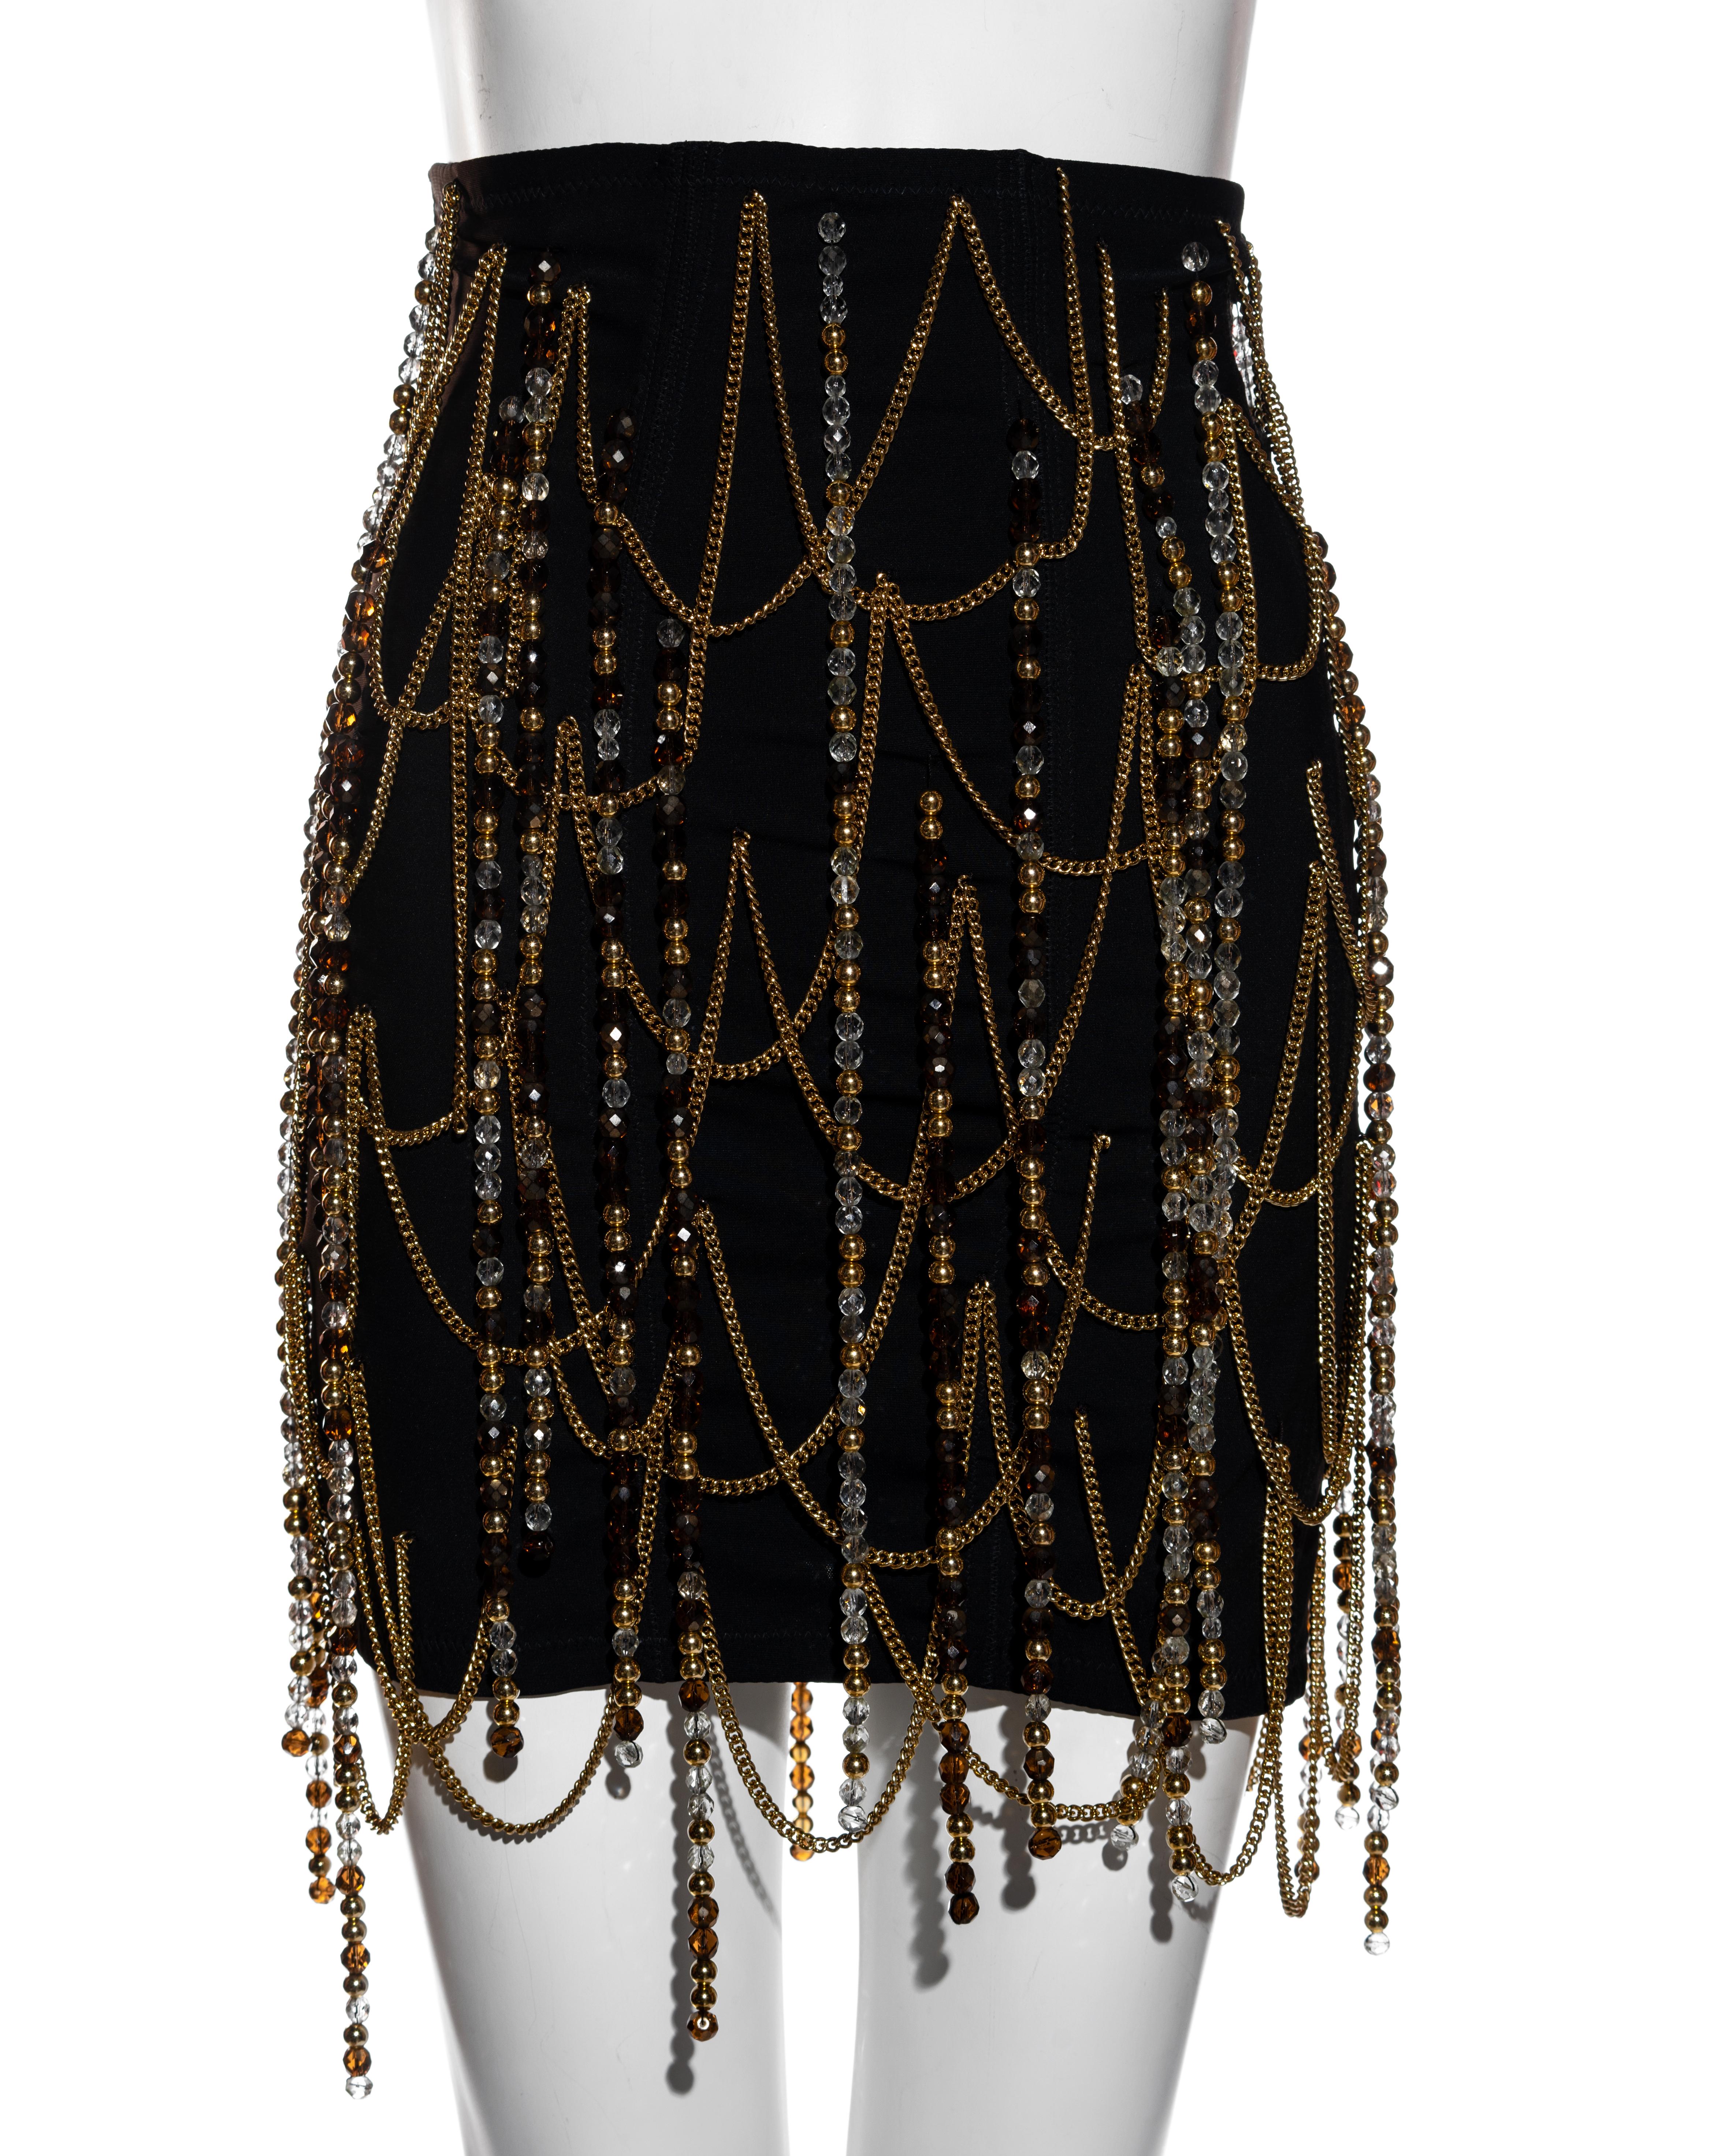 ▪ Dolce & Gabbana black corseted mini skirt 
▪ Gold metal chain detail 
▪ Beaded tassels 
▪ Metal hook closures at centre-back 
▪ IT 42 - FR 38 - UK 10 - US 6
▪ Spring-Summer 1991